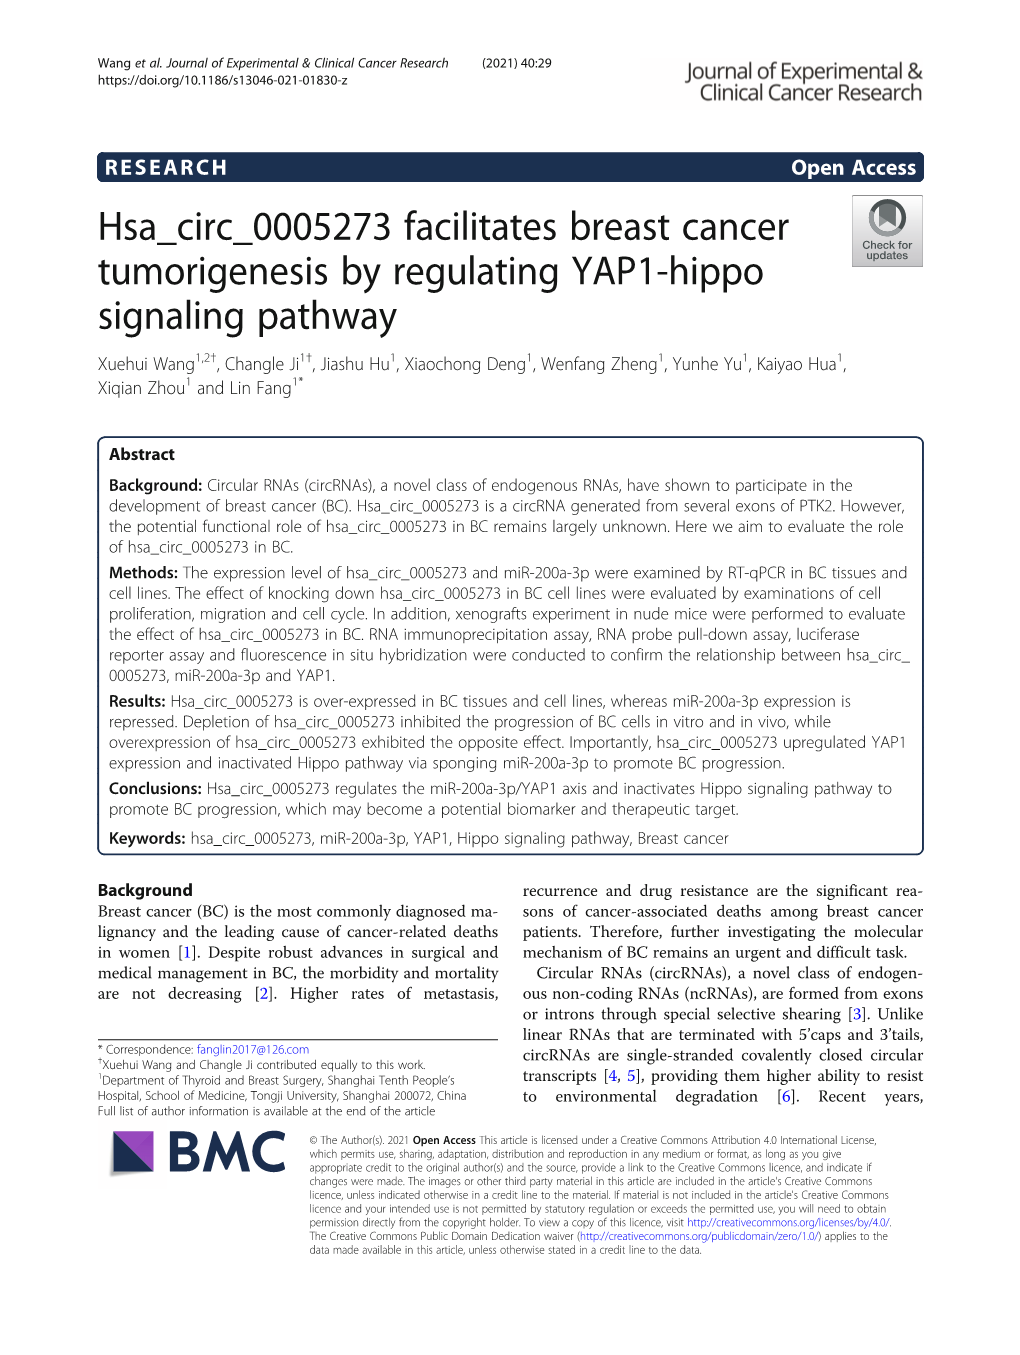 Hsa Circ 0005273 Facilitates Breast Cancer Tumorigenesis by Regulating